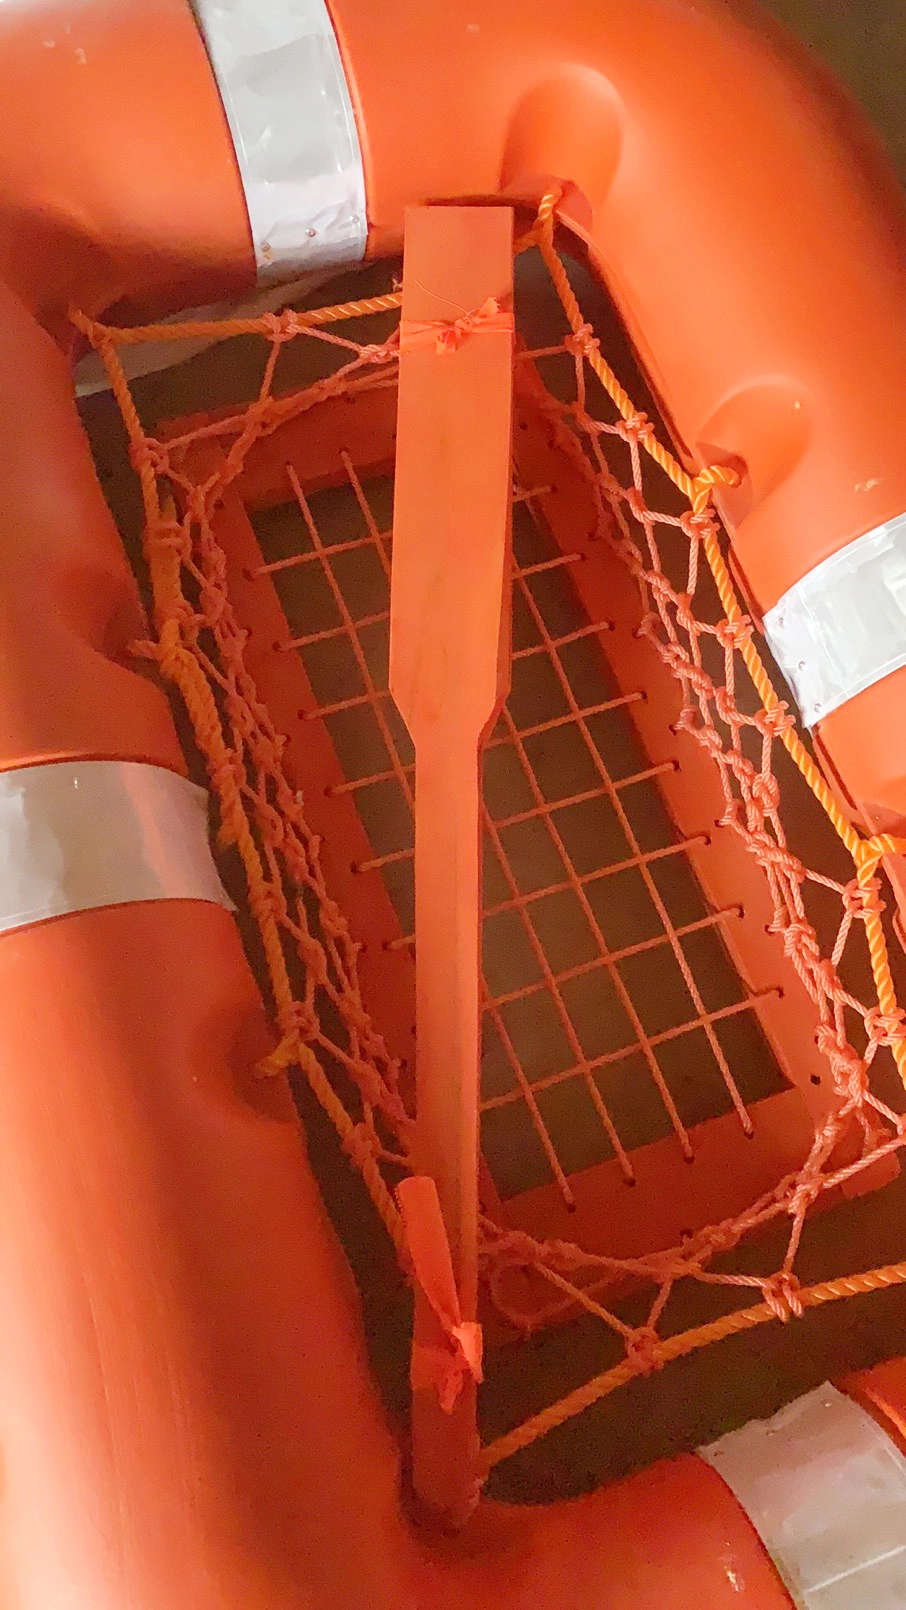 Manufacture Marine Fiberglass Plastic Life Saving Valve10 Person Life Saving Buoy Raft